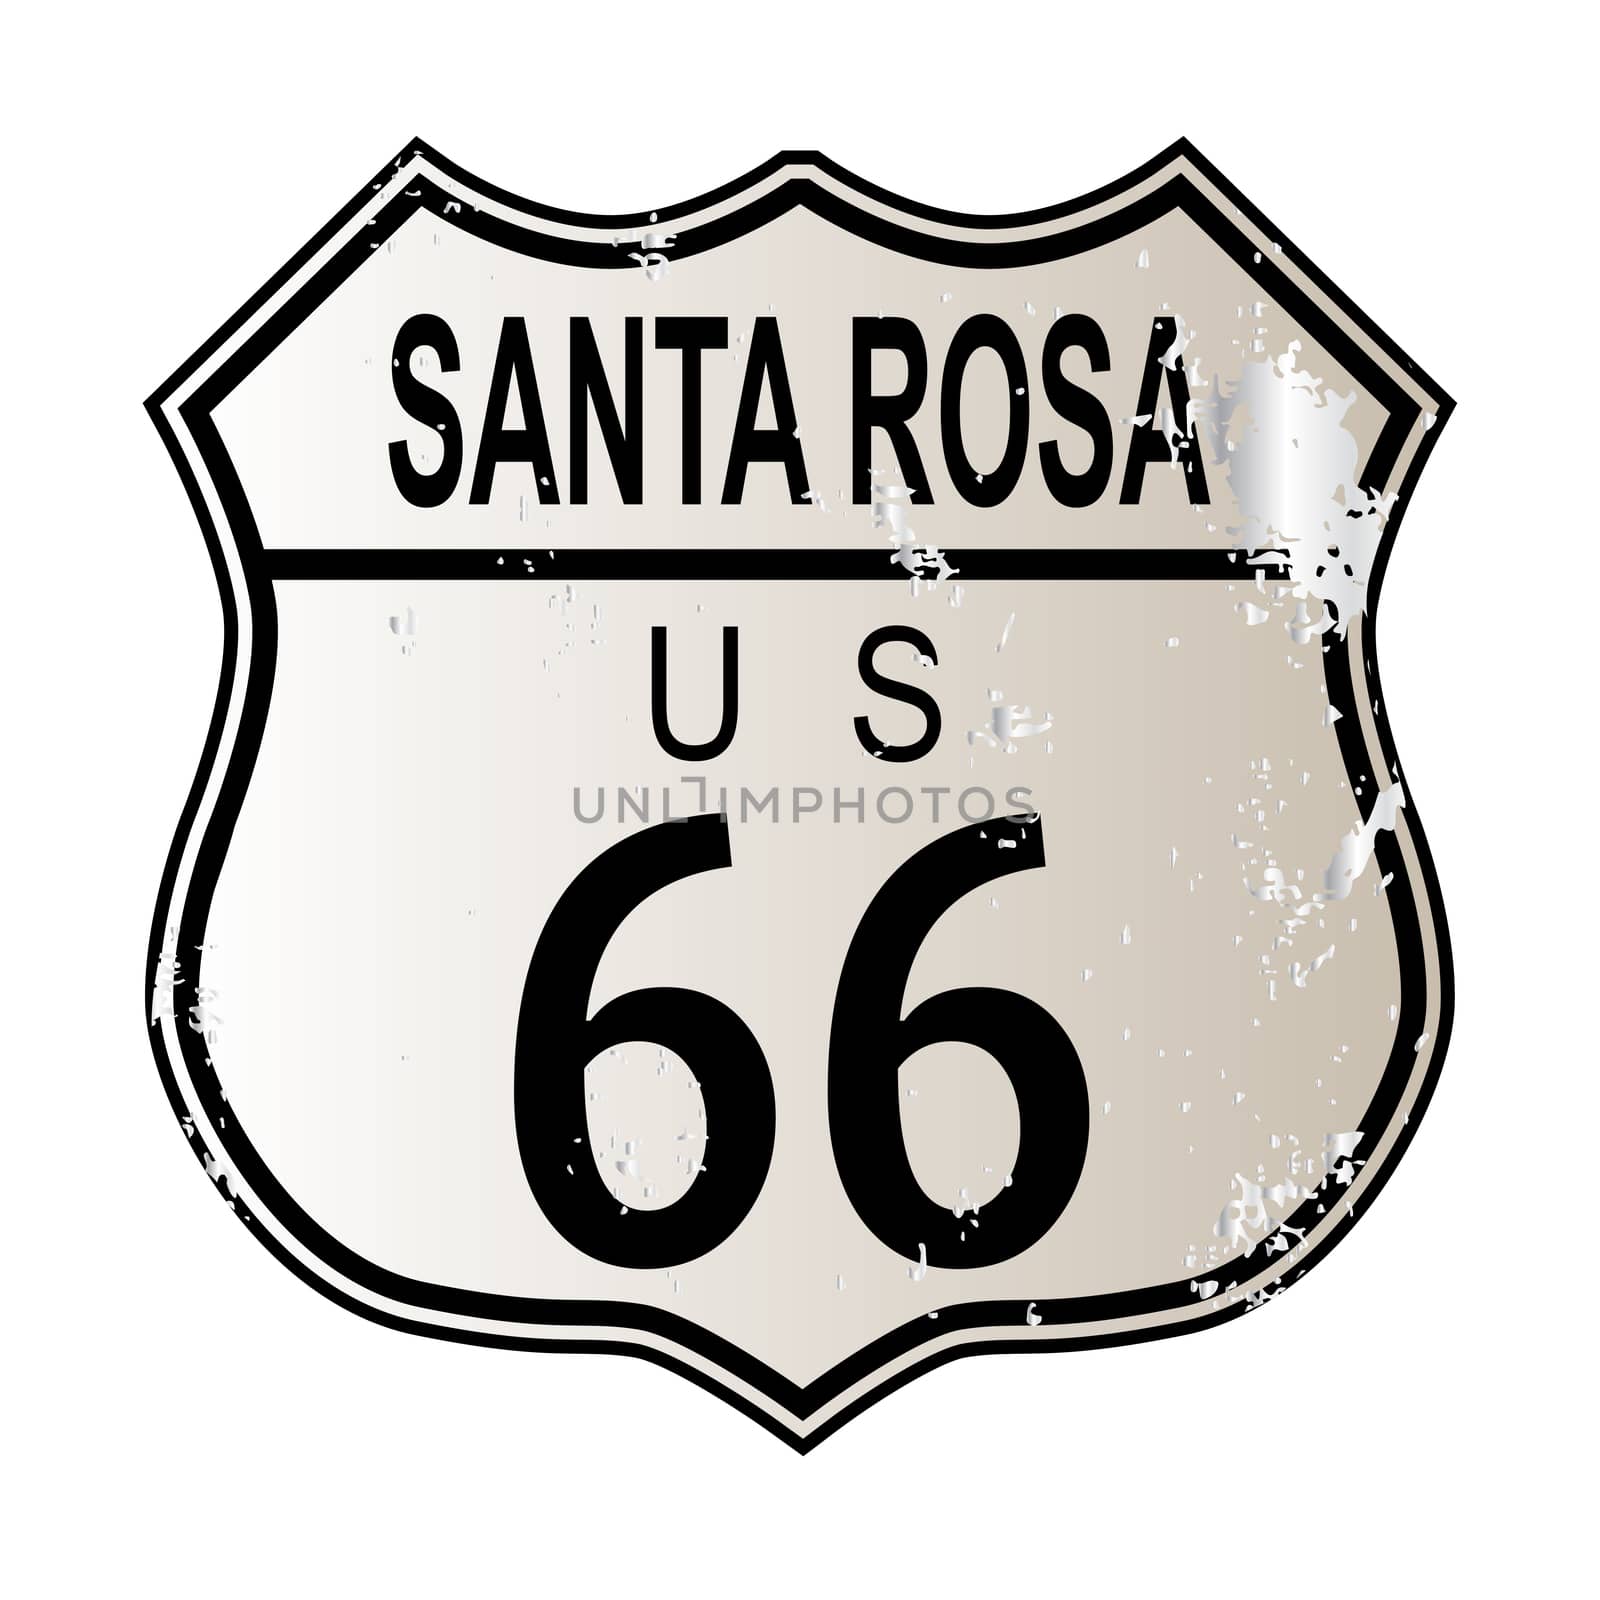 Santa Rosa Route 66 Highway Sign by Bigalbaloo